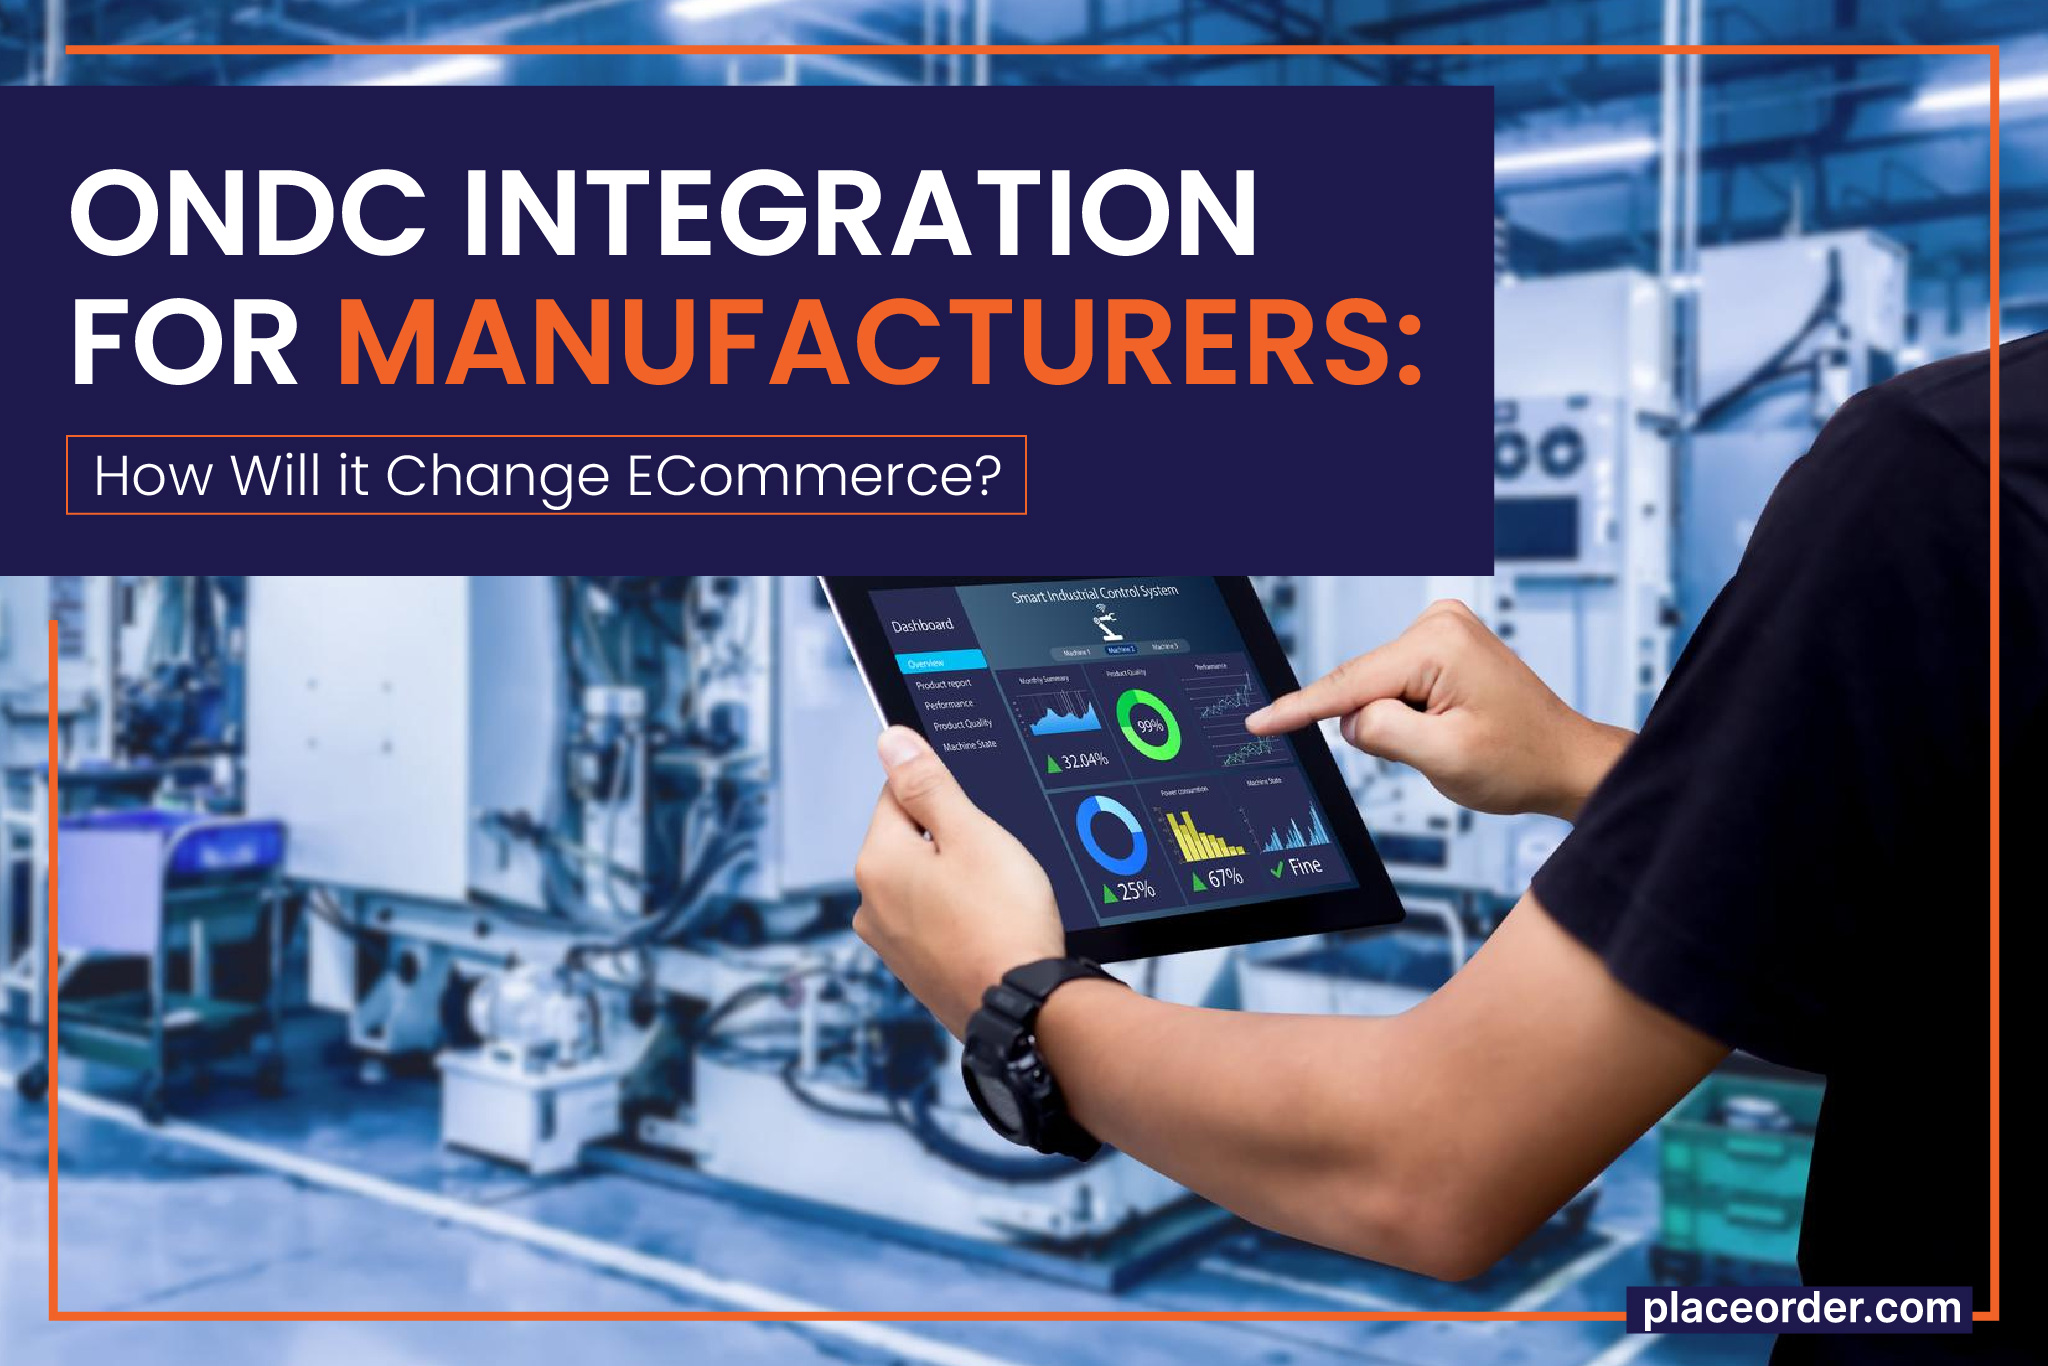 ONDC Integration for Manufacturers: